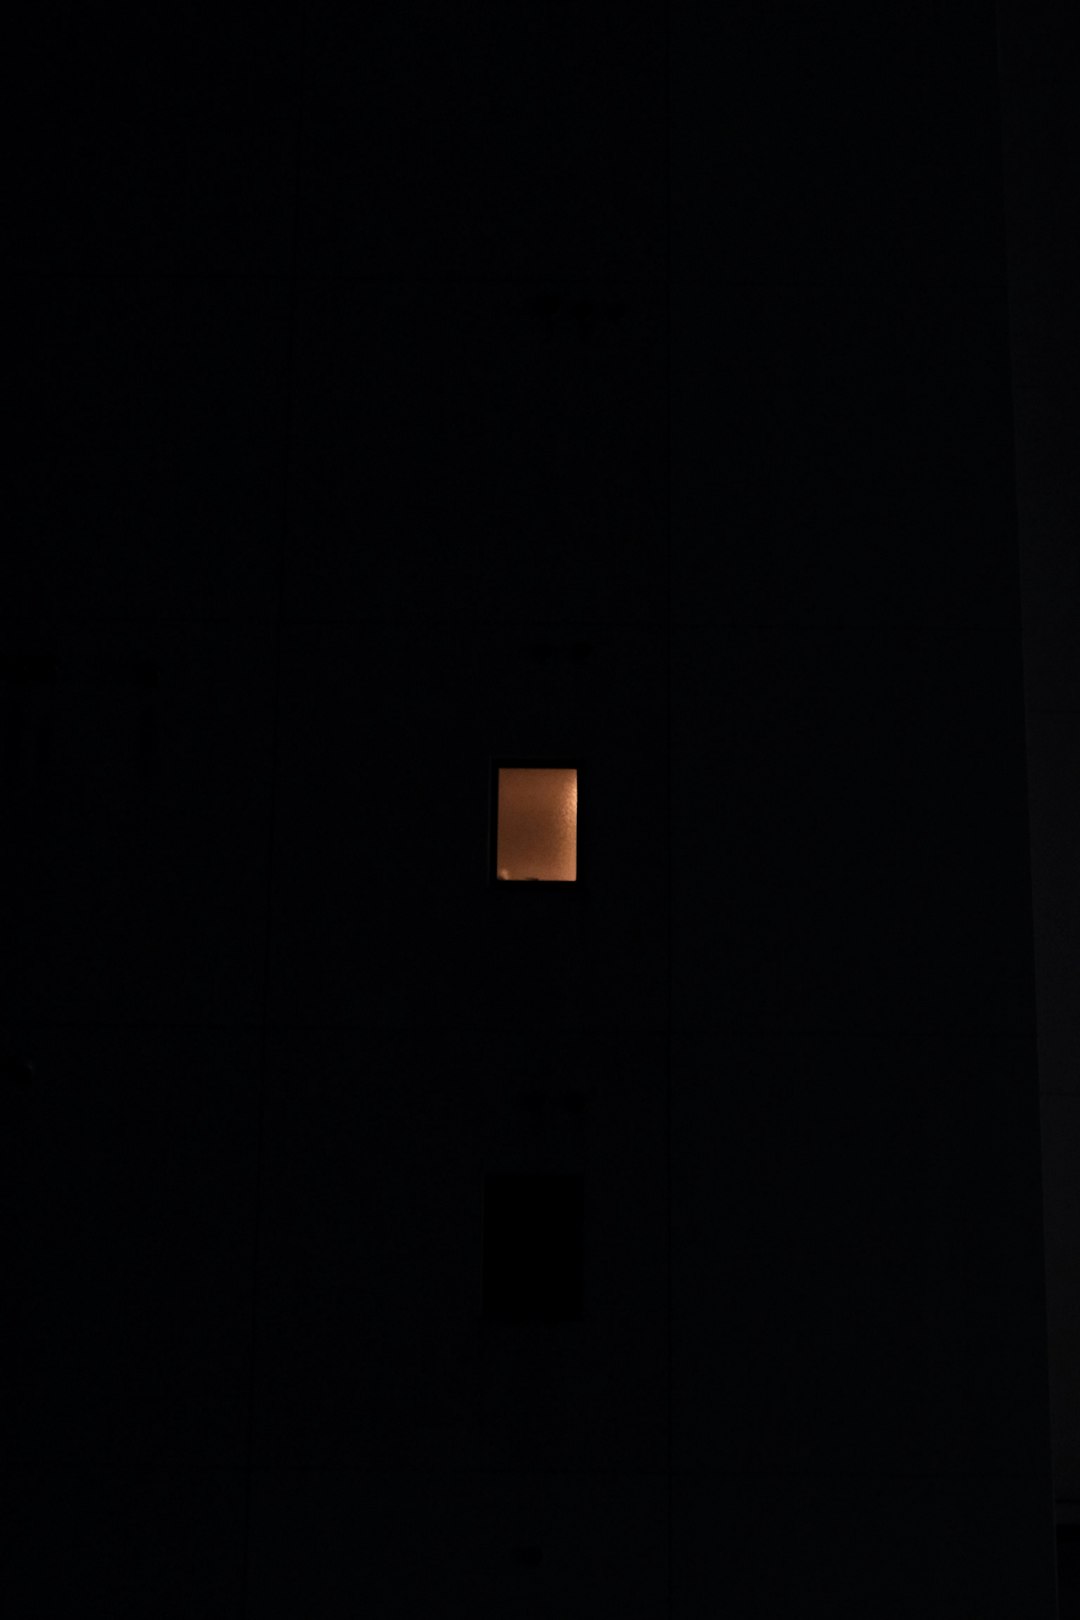 white round light turned on in dark room